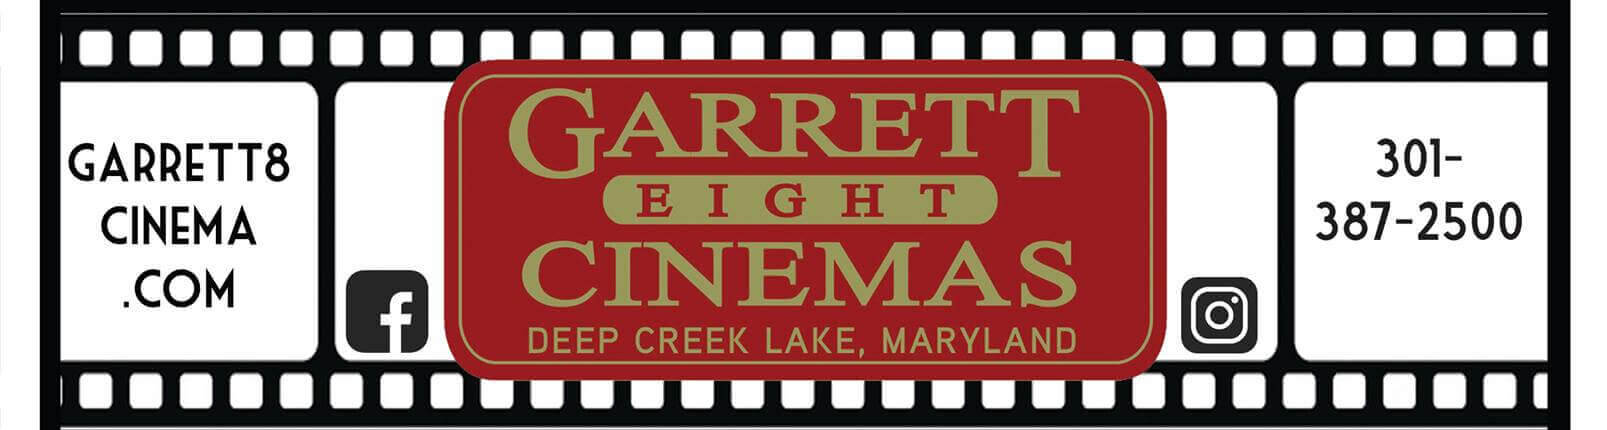 Garrett 8 Cinemas Movie List (03-09 September)